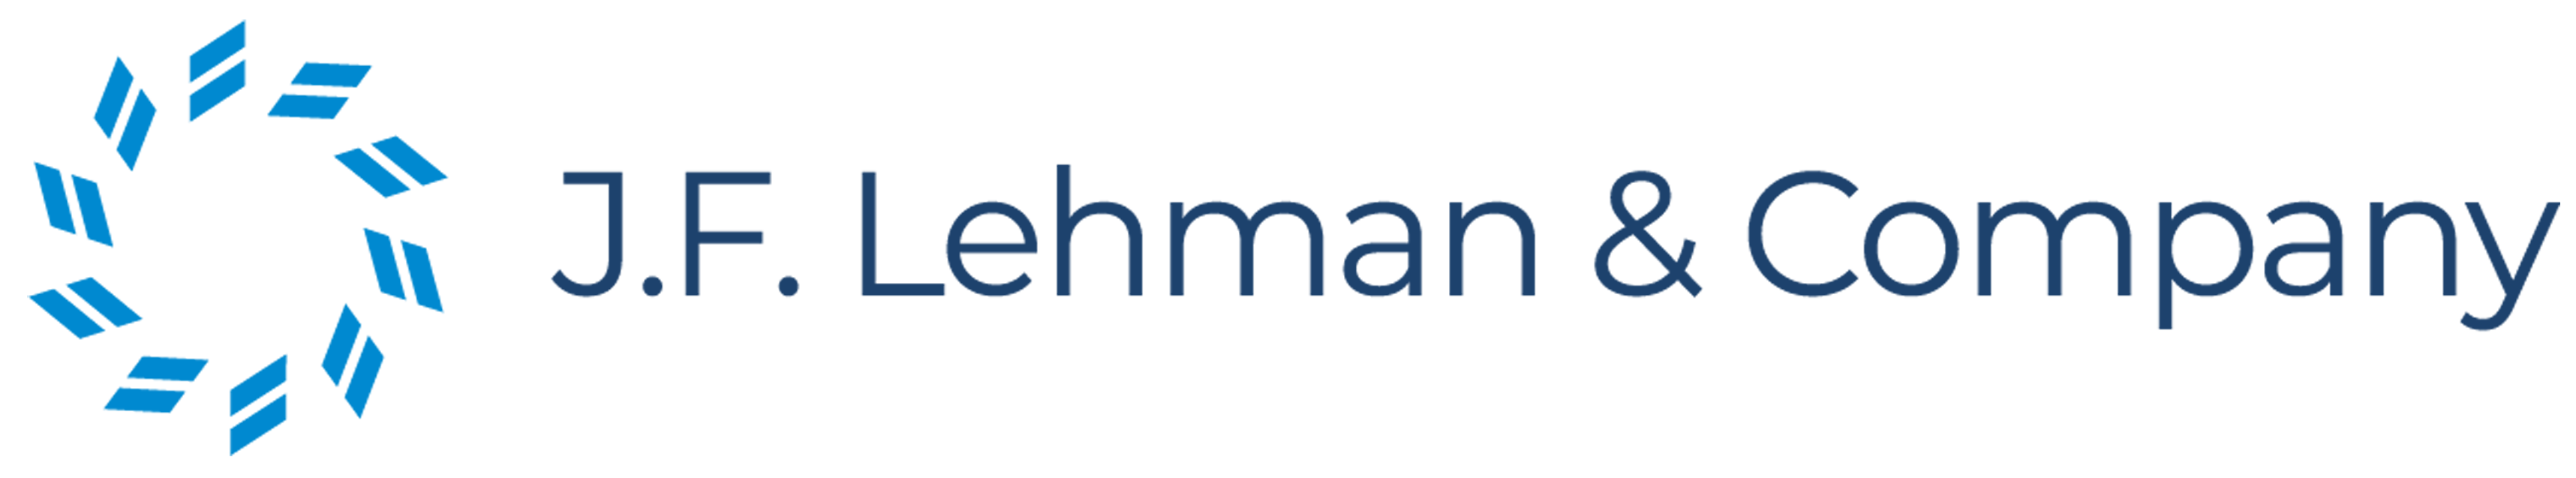 J.F. Lehman & Company Welcomes Frederick J. Harris to its Operating Executive Board, May 8 2017